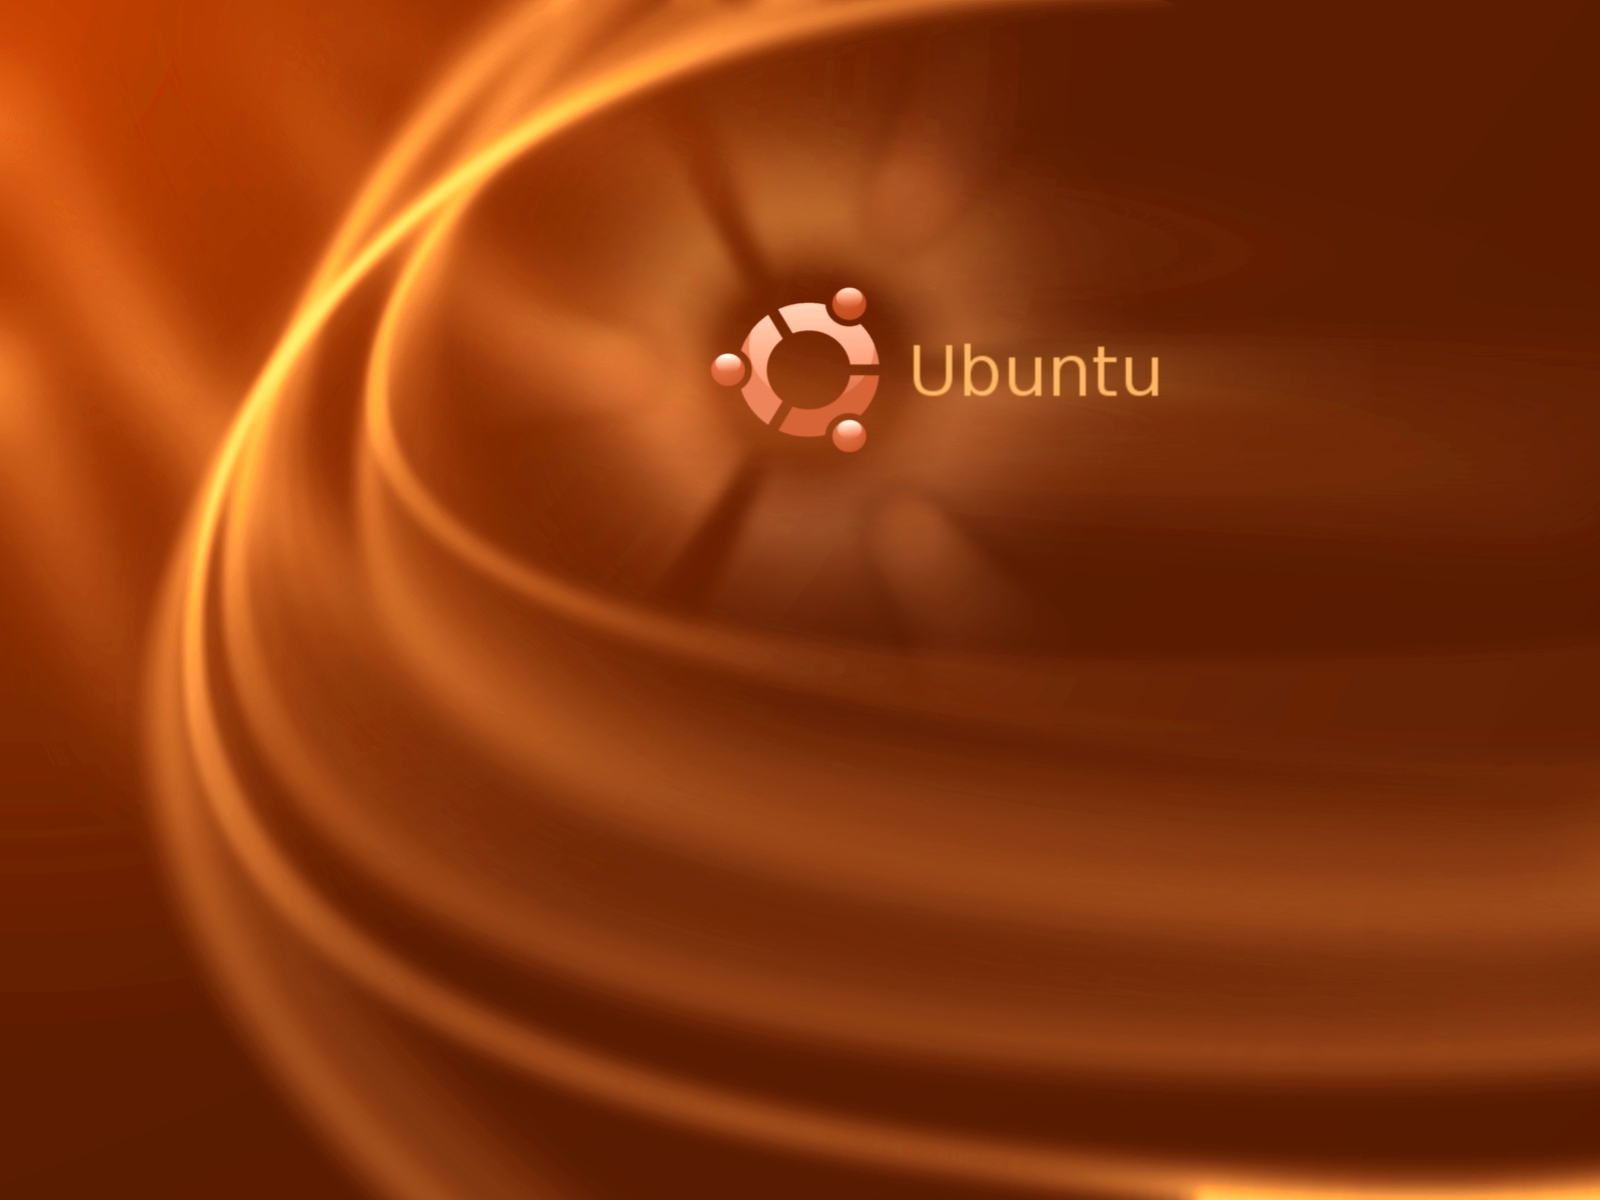 New Ubuntu Wallpapers NoobsLab UbuntuLinux News Reviews